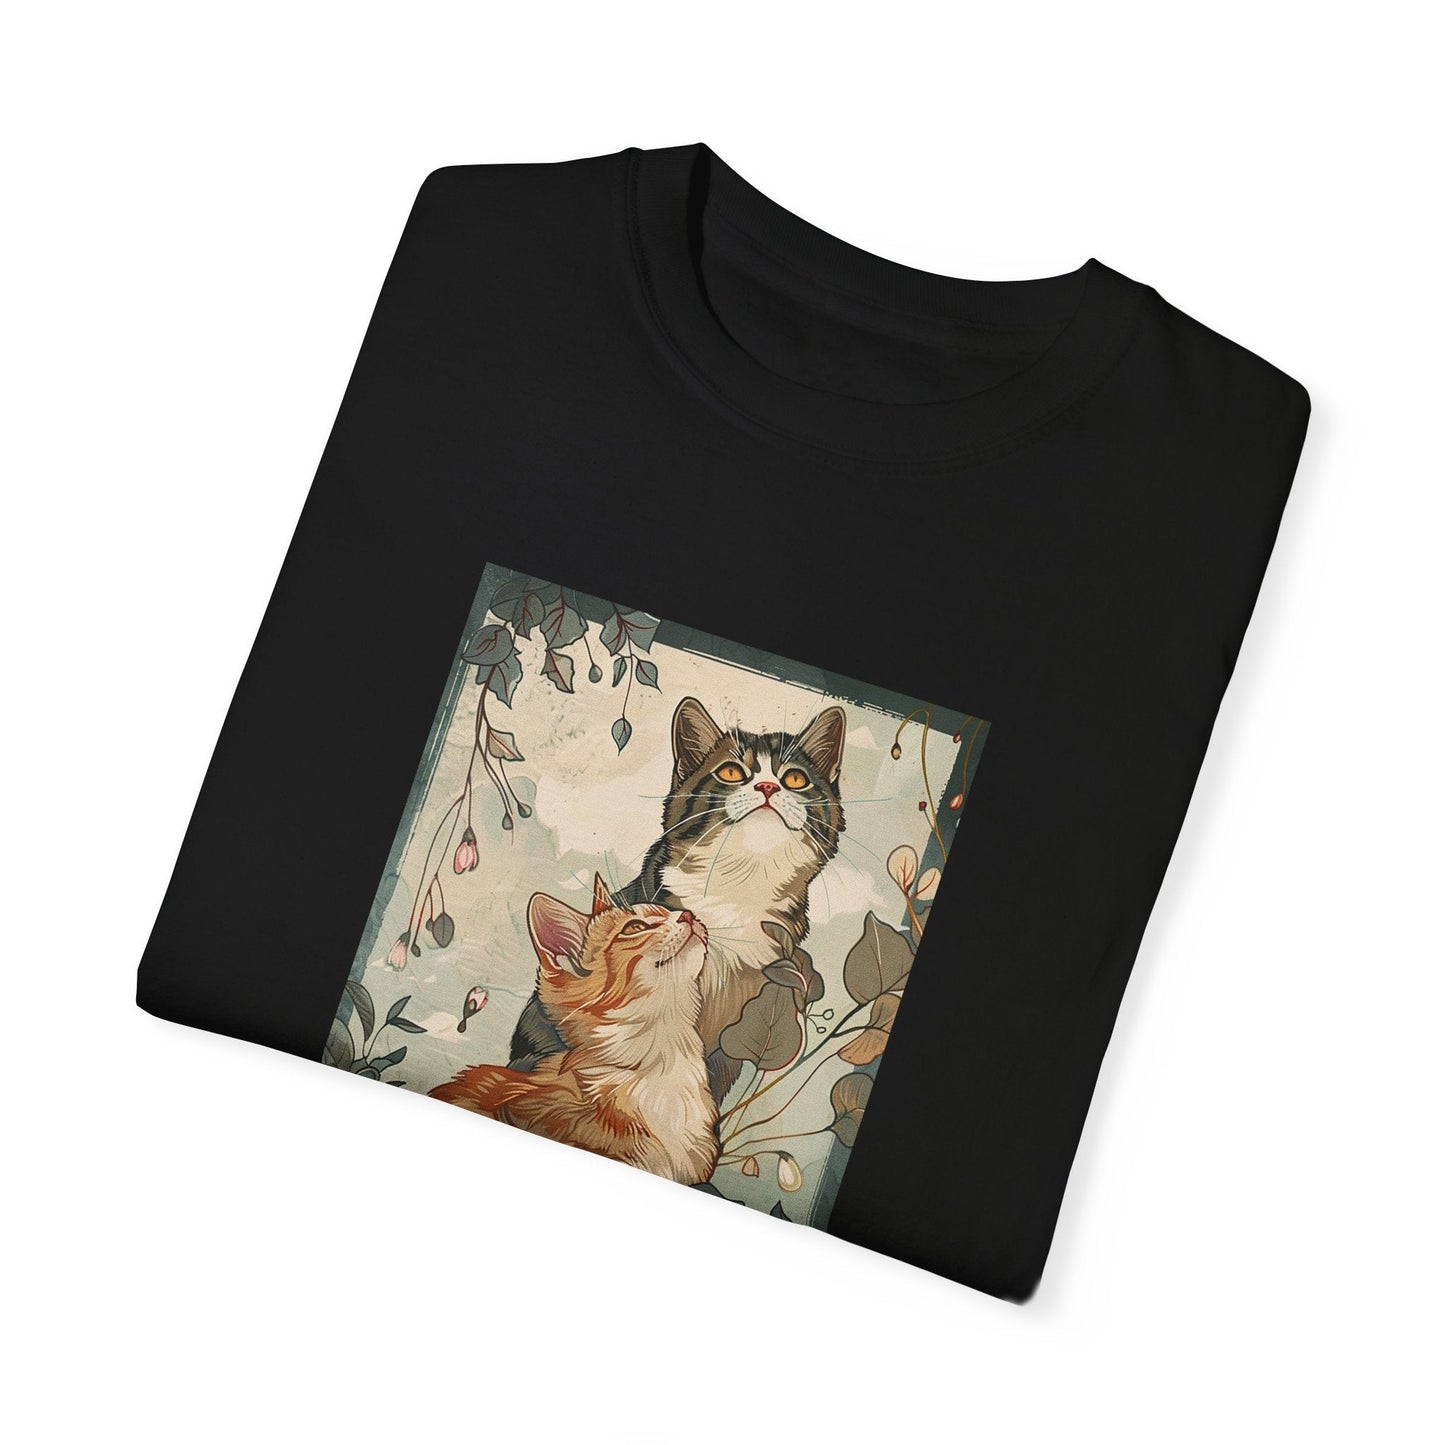 Vintage Pair of Cats T-shirt, Orange and Gray Tabby Cats Shirt, Art Deco Cats Shirt - FlooredByArt